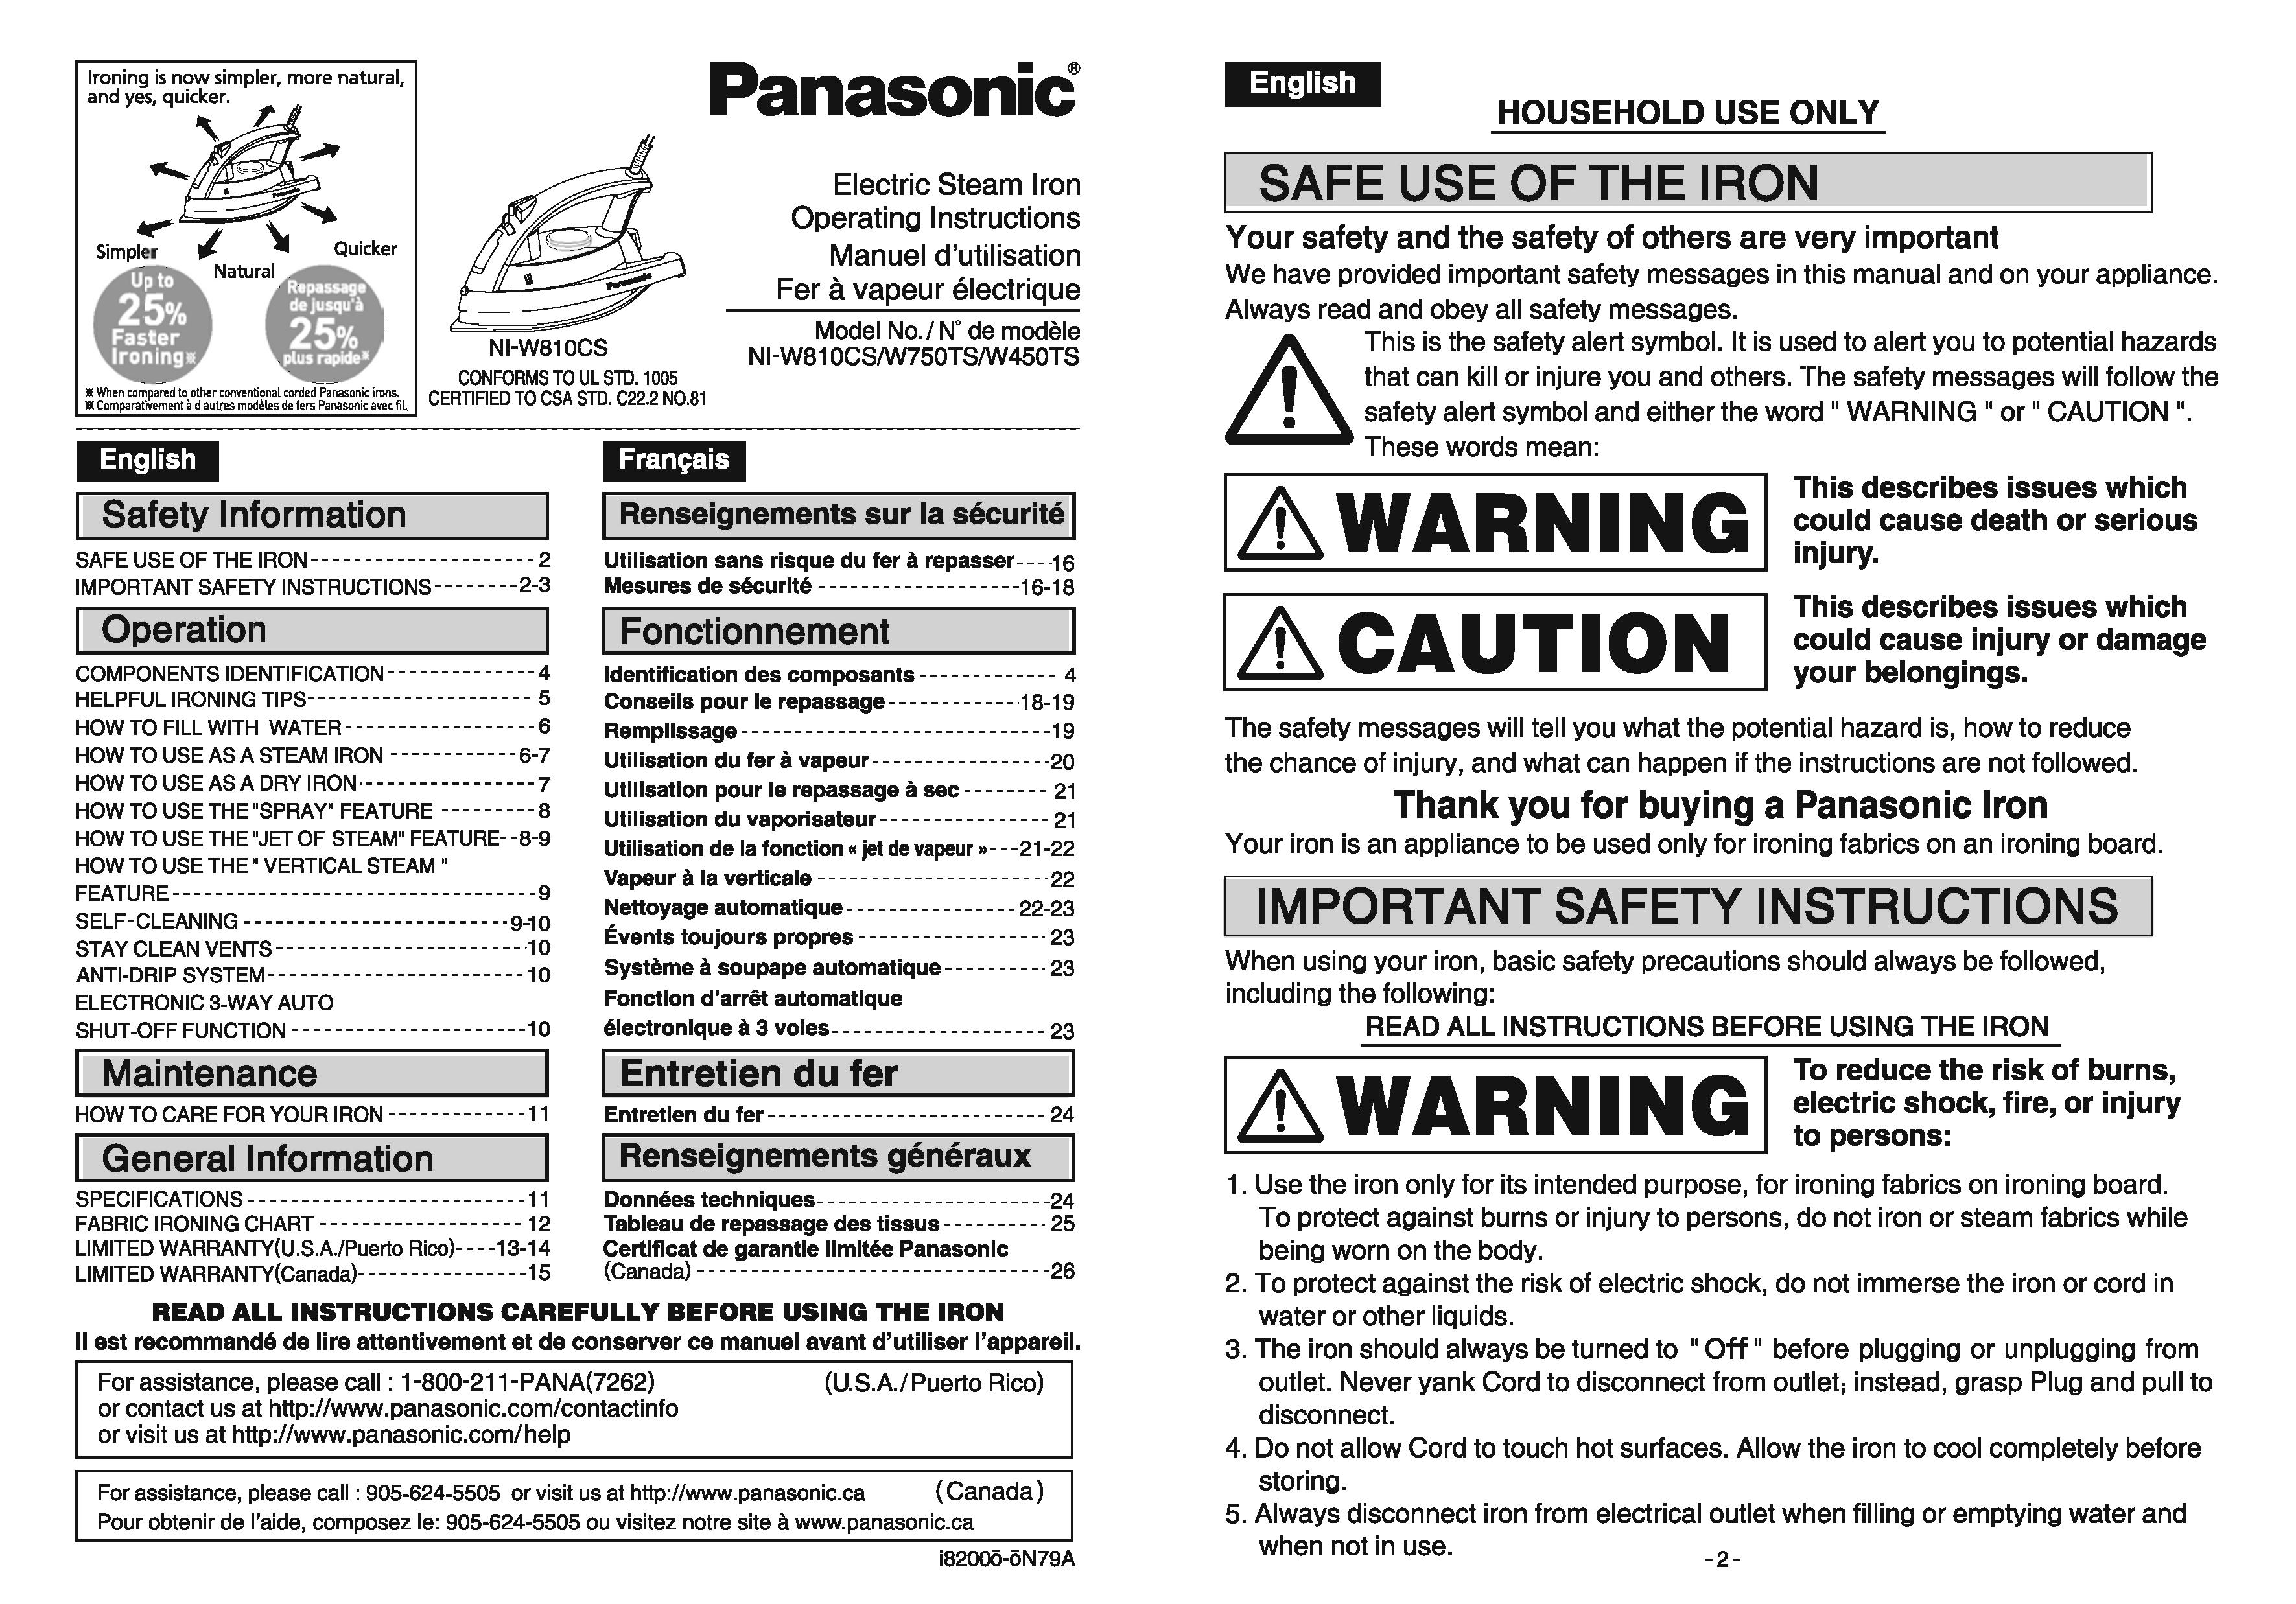 Panasonic NIW450TS Iron User Manual